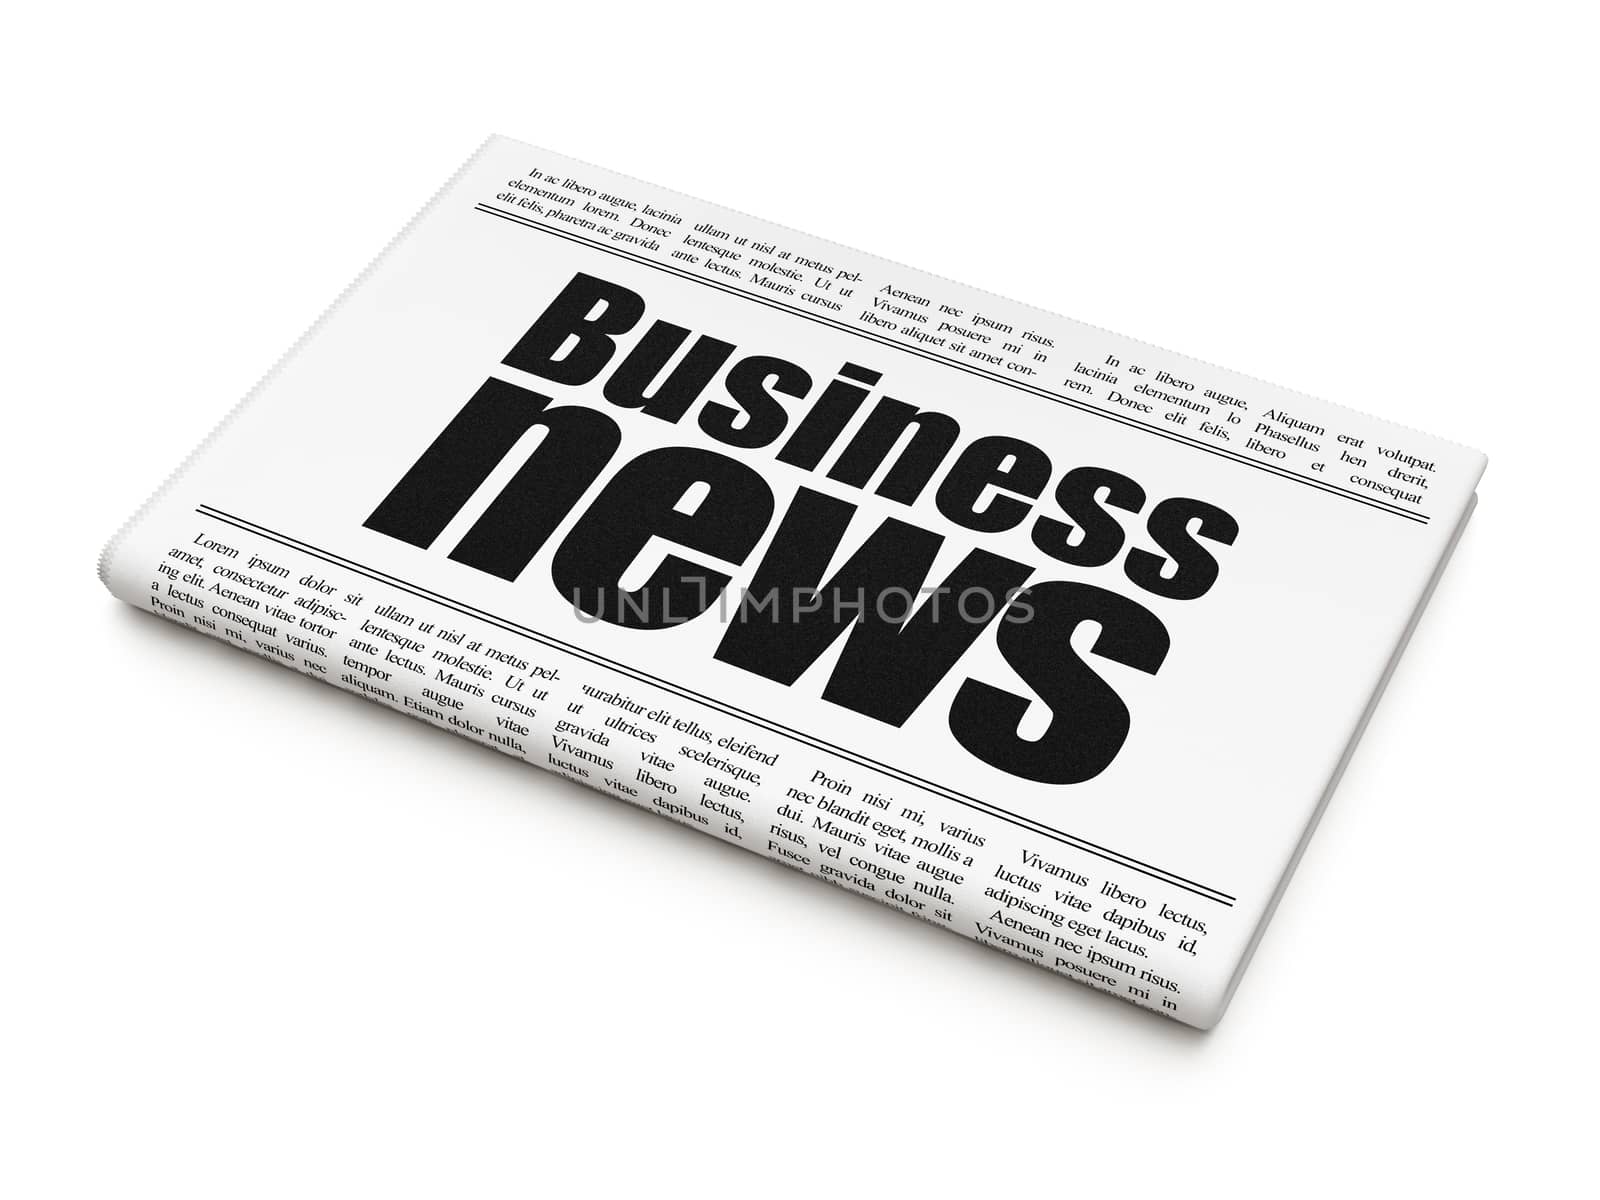 News news concept: newspaper headline Business News by maxkabakov